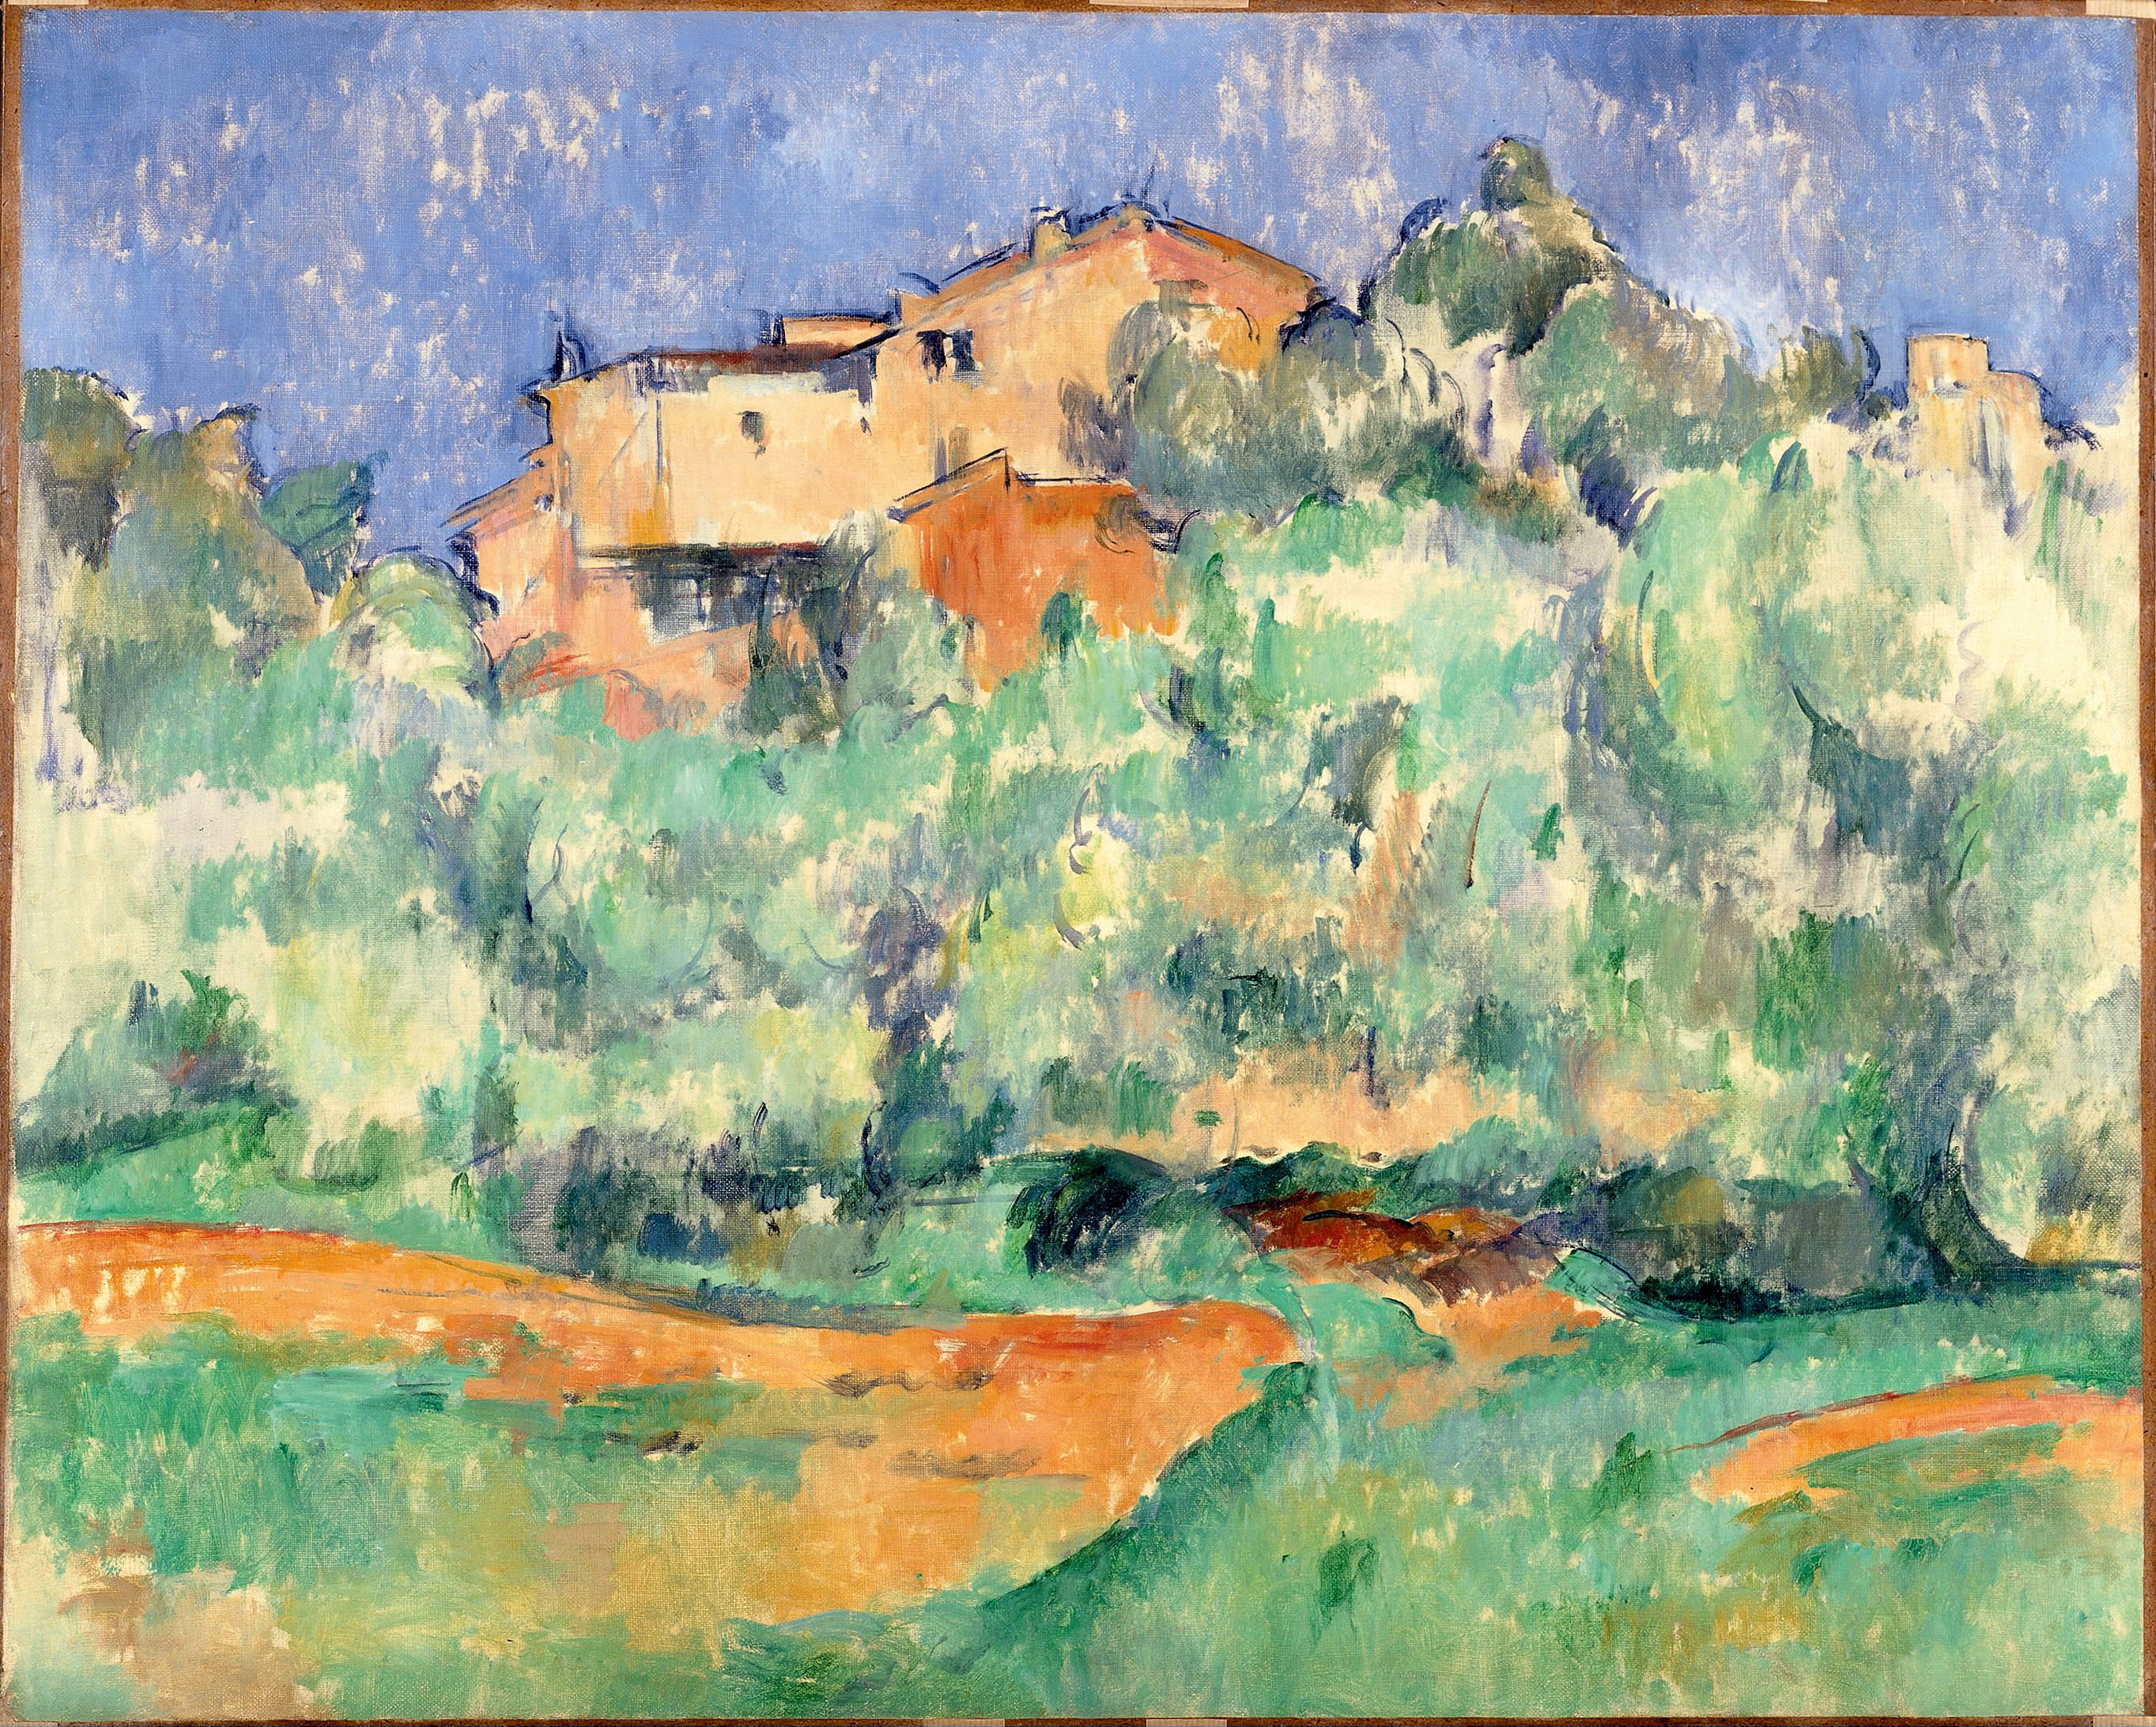 View of Gardanne - Paul Cezanne - WikiArt.org 